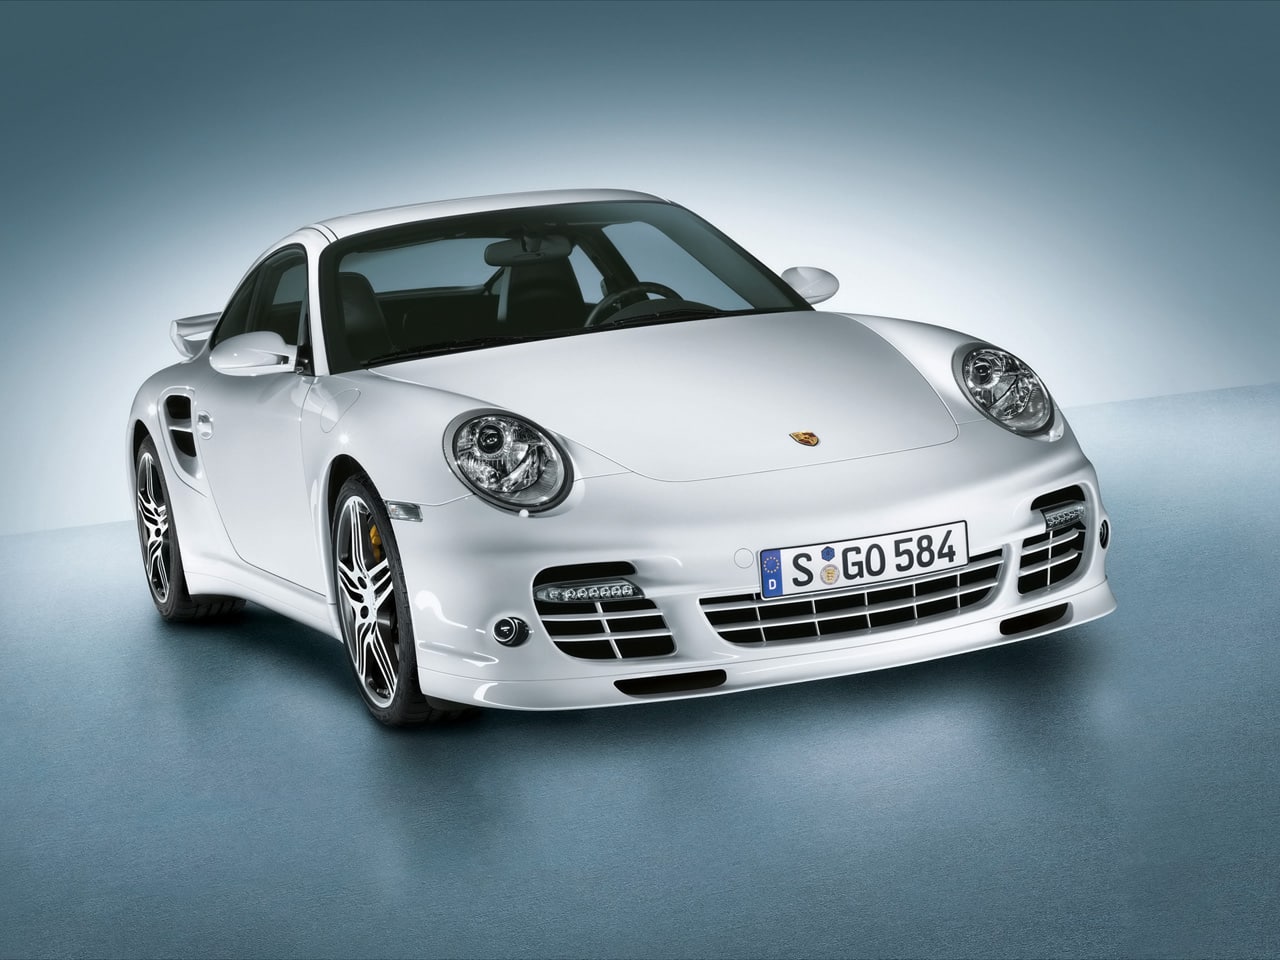 nuova Porsche 911 model year 2012